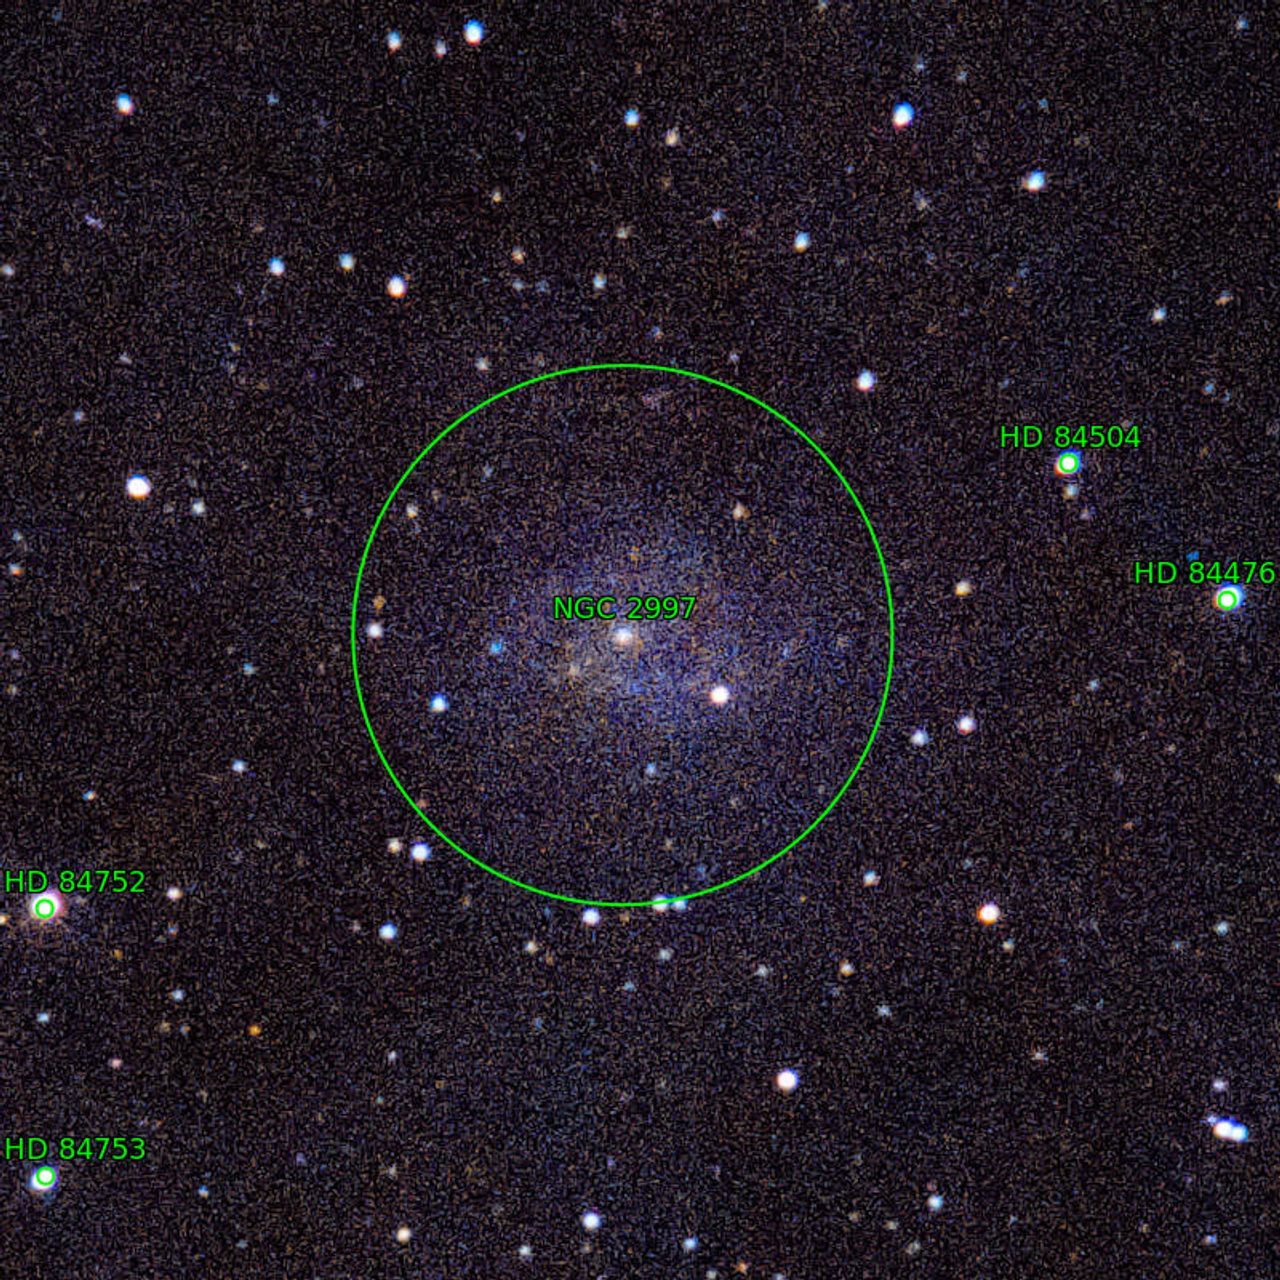 Annotation around NGC2997